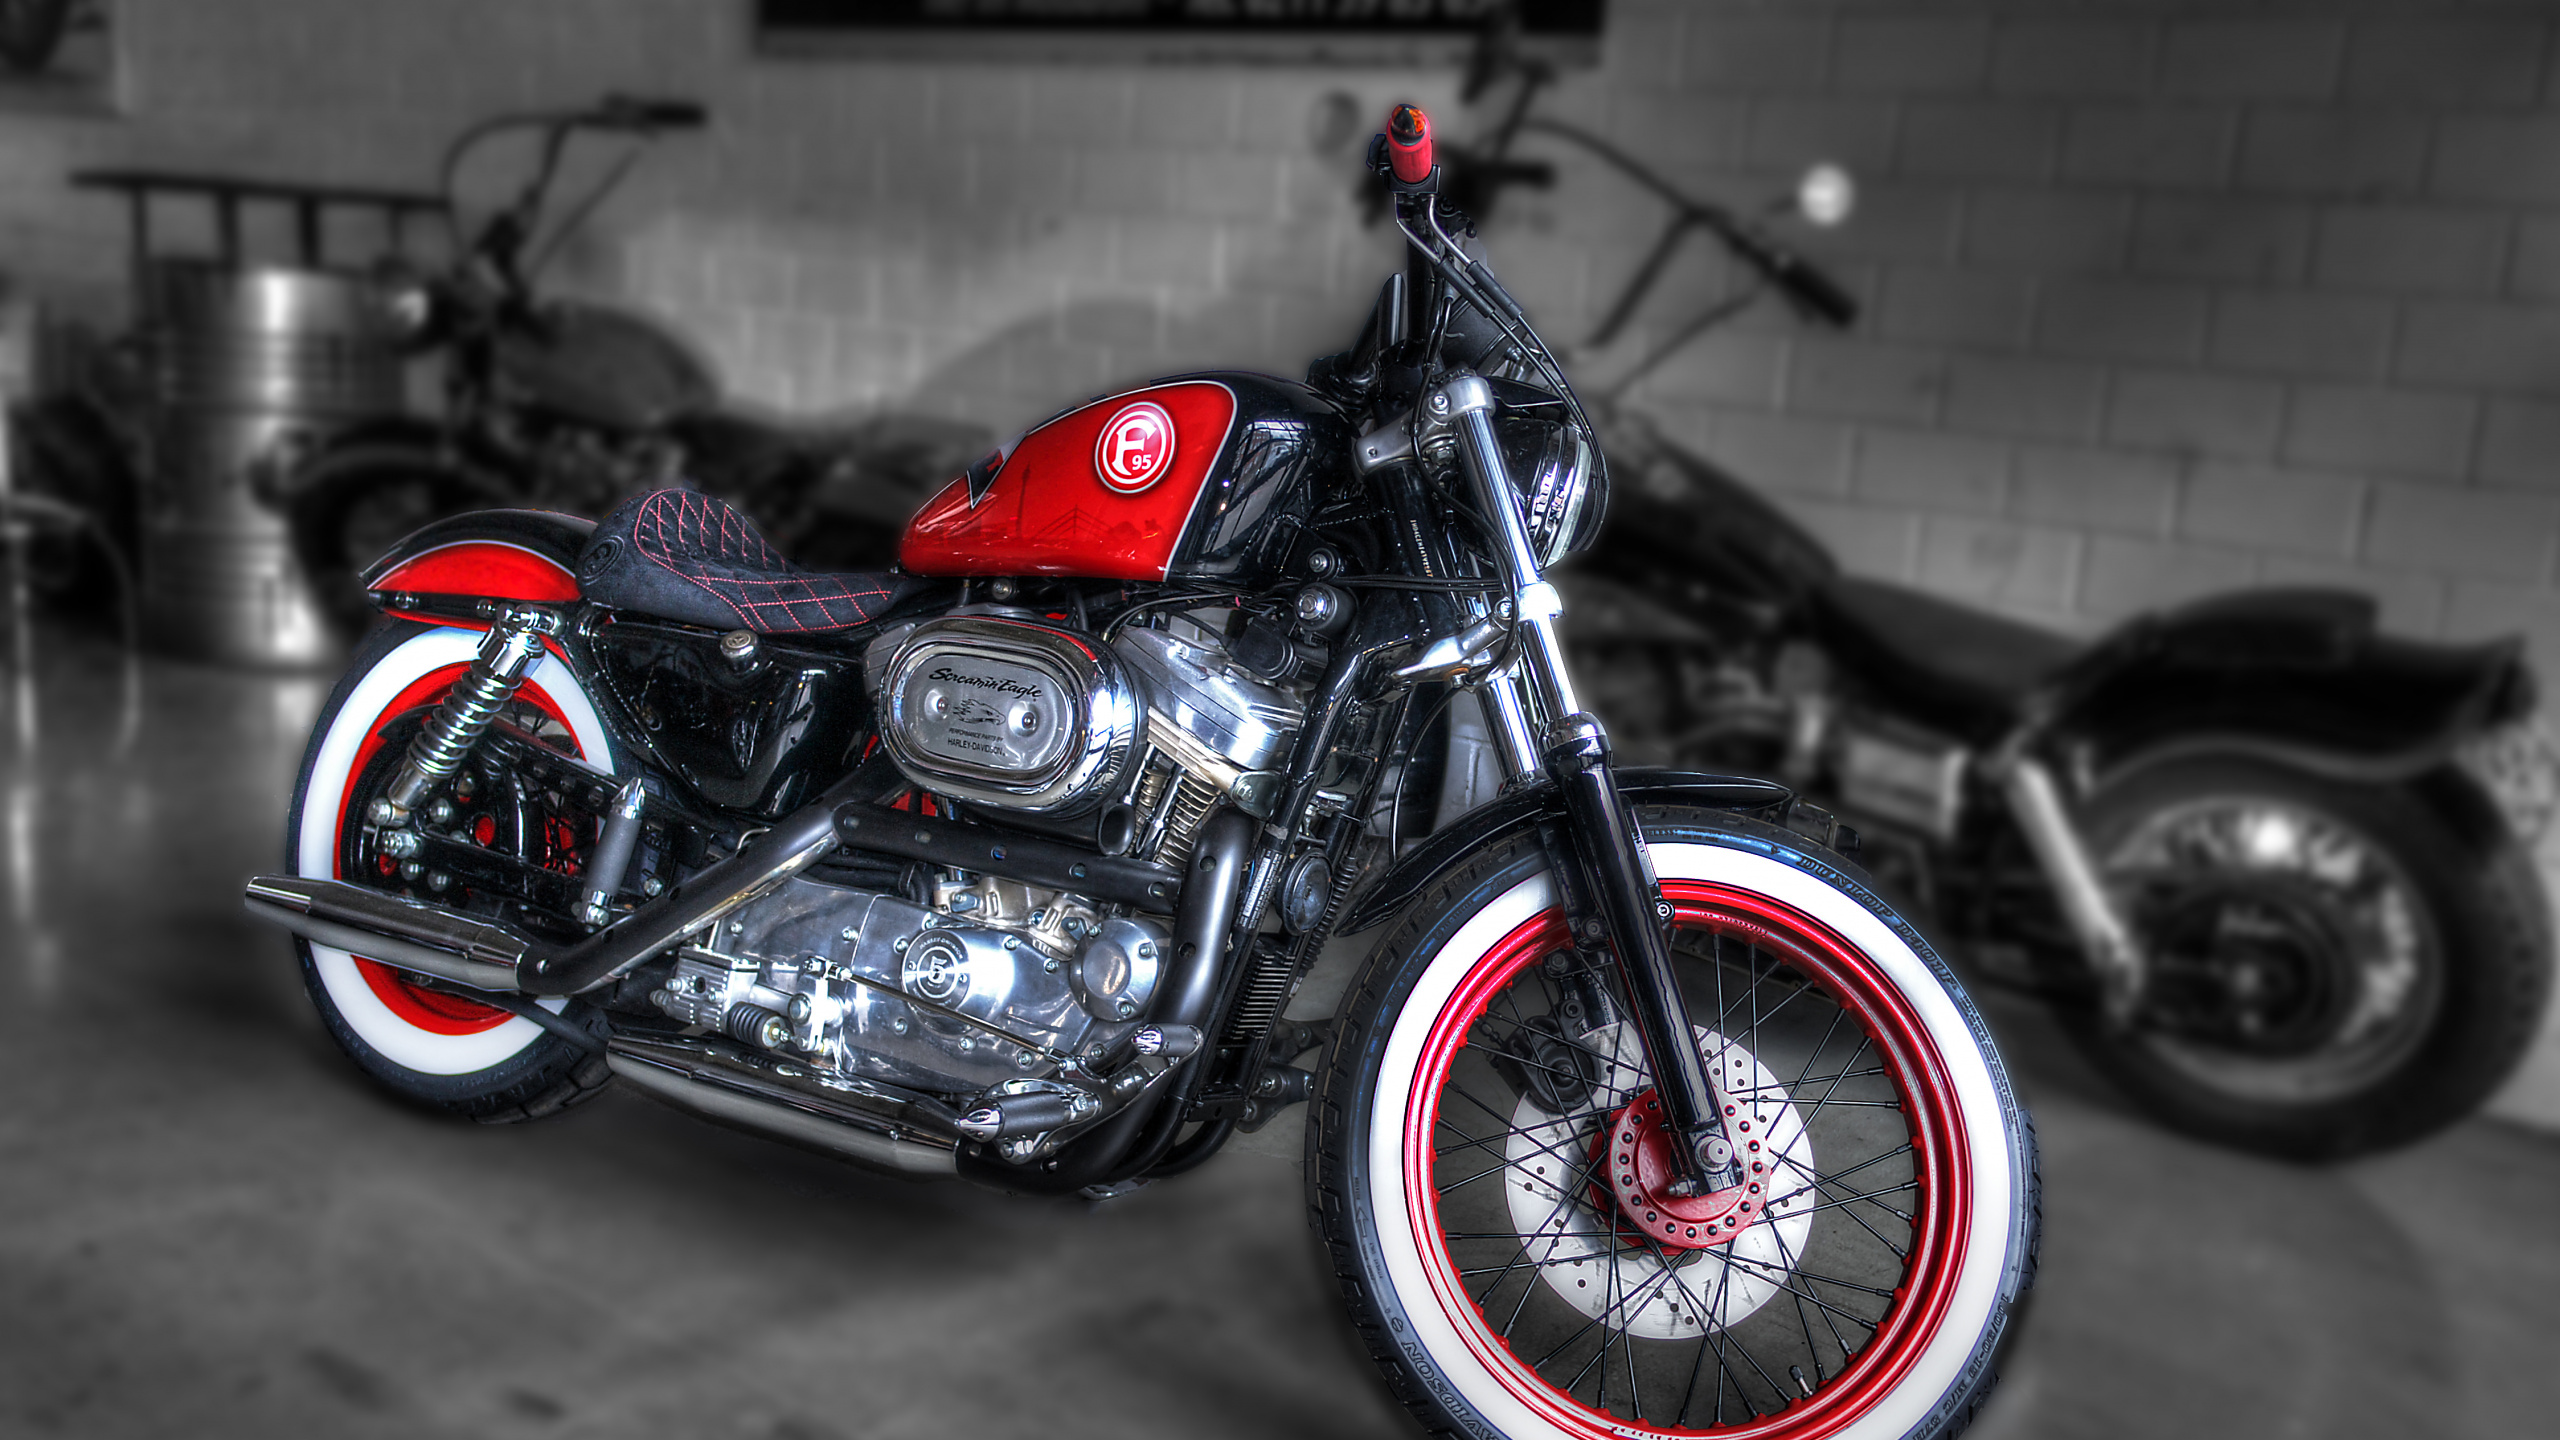 Motocicleta Cruiser Roja y Negra. Wallpaper in 2560x1440 Resolution